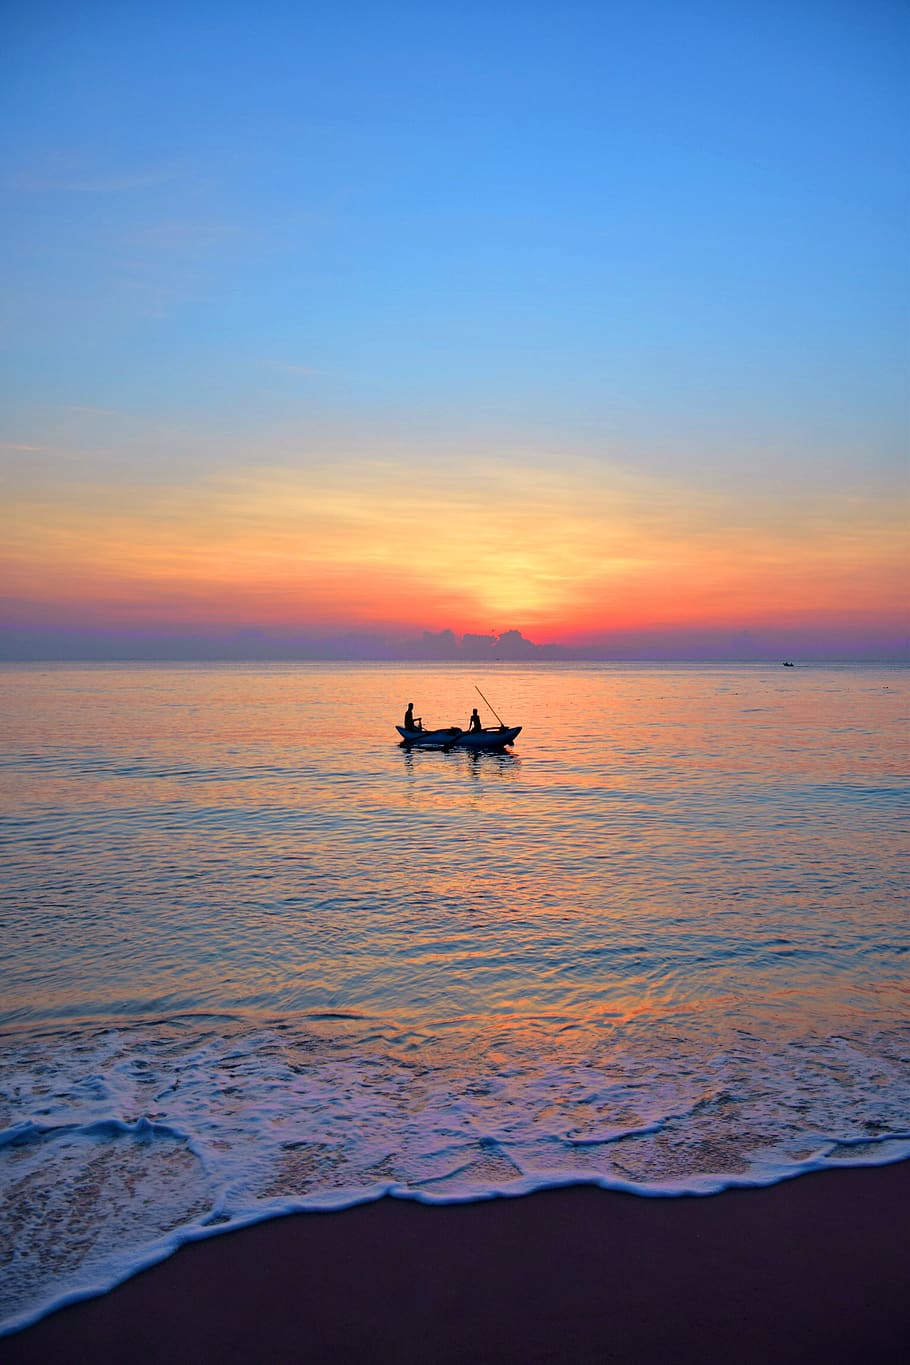 sri lanka, kattankudy, #sunrise #boat #fishing #morning, sunset